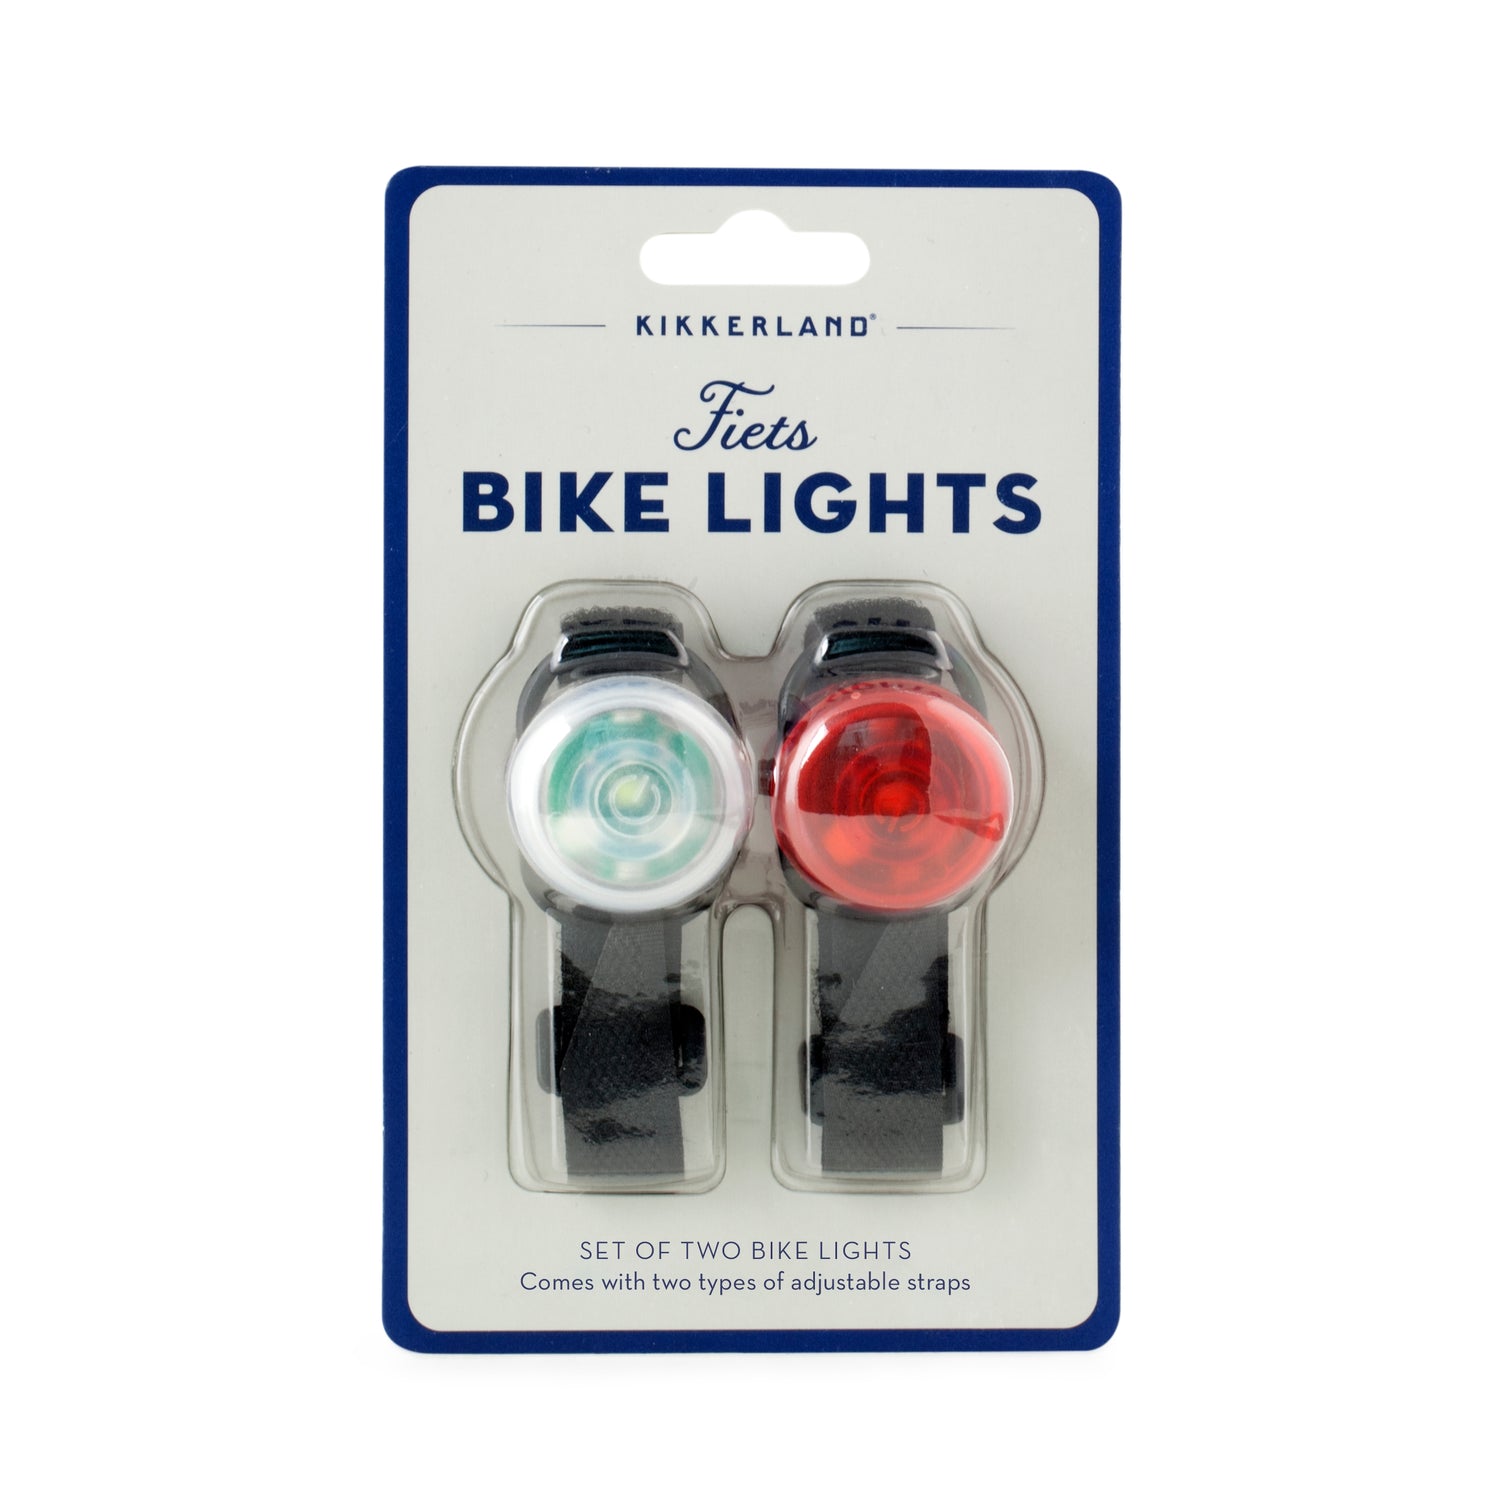 Fiets Bike Lights